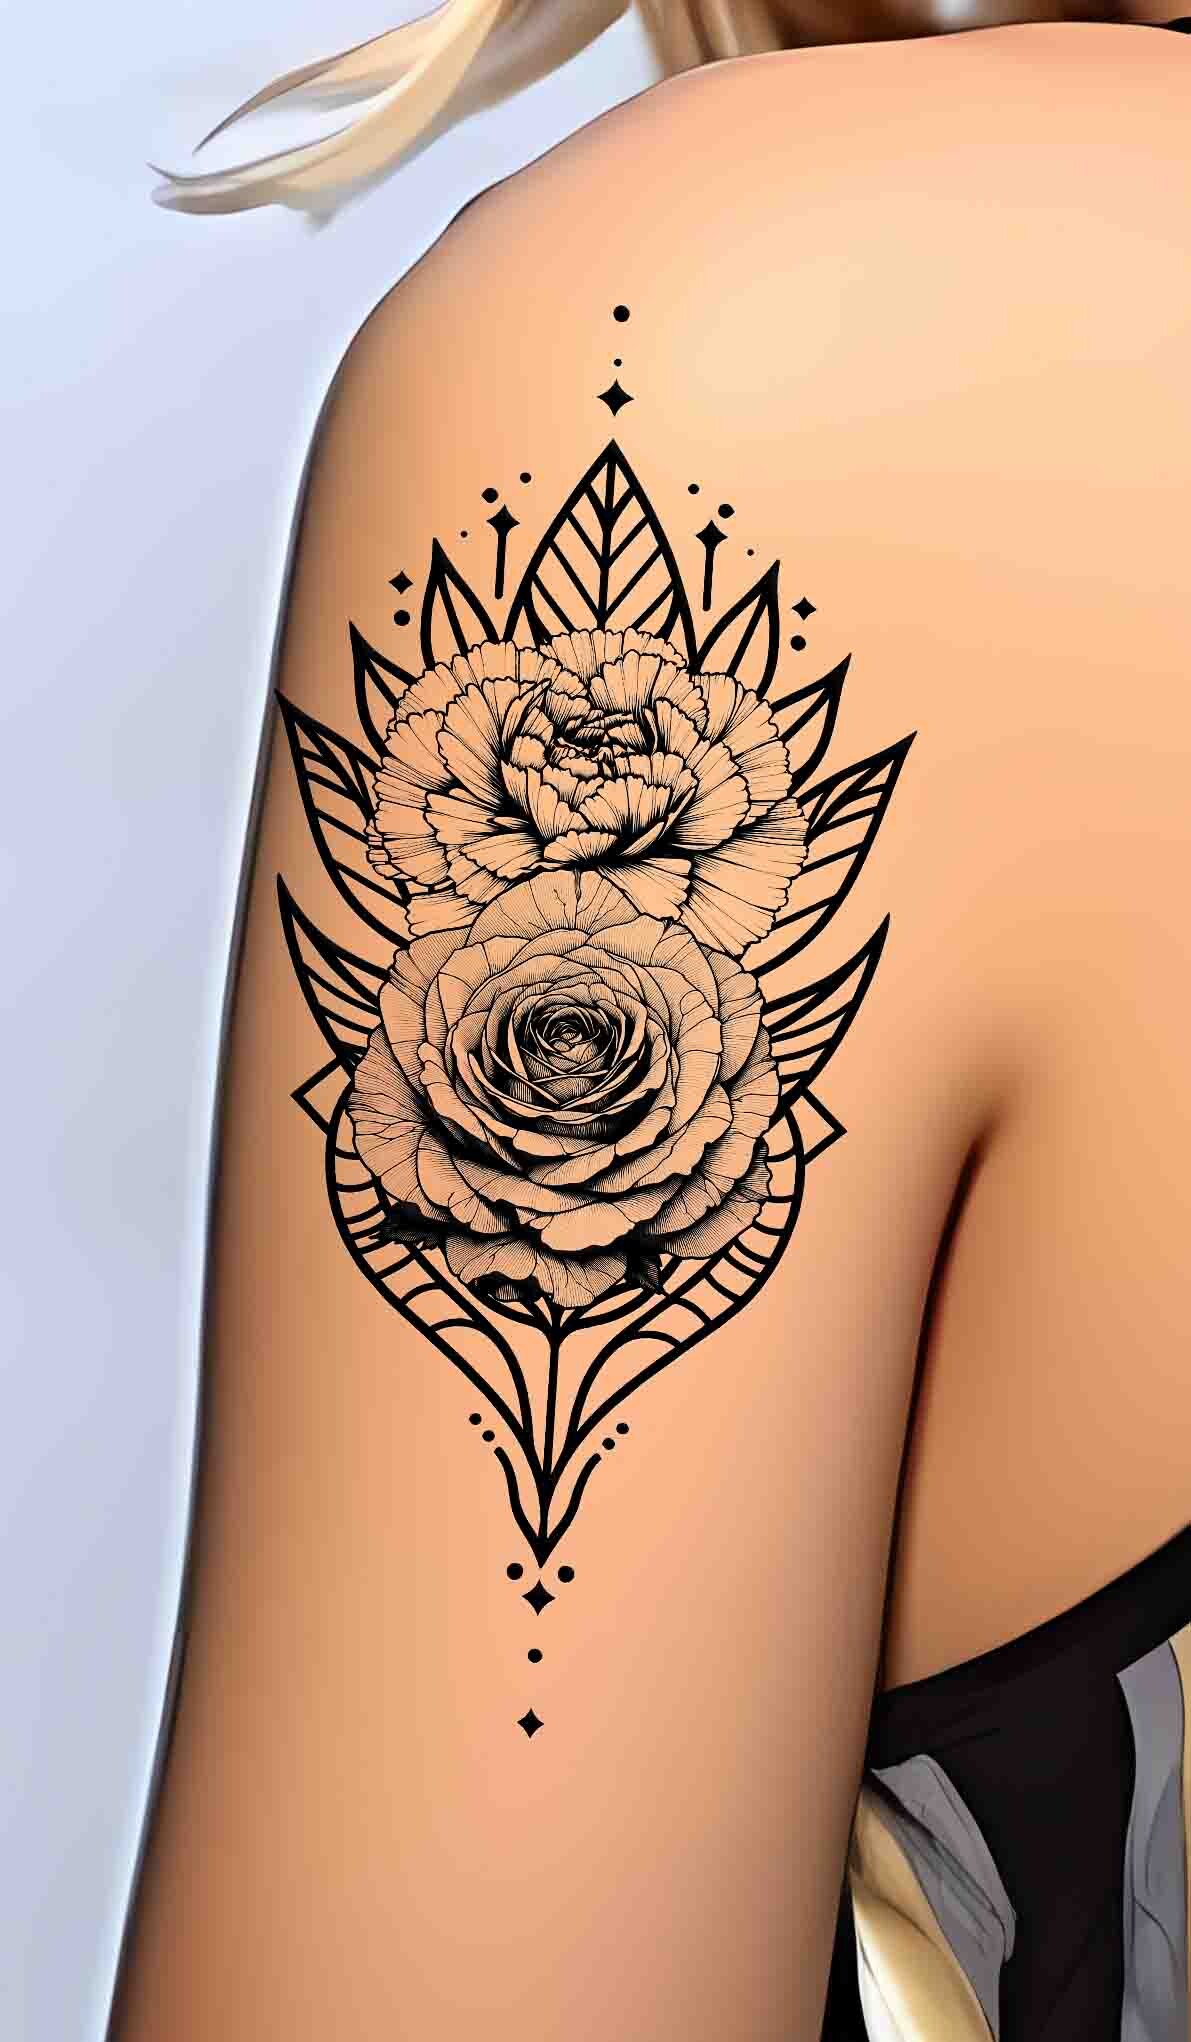 Carnation january birth flower tattoo drawings Vector Image